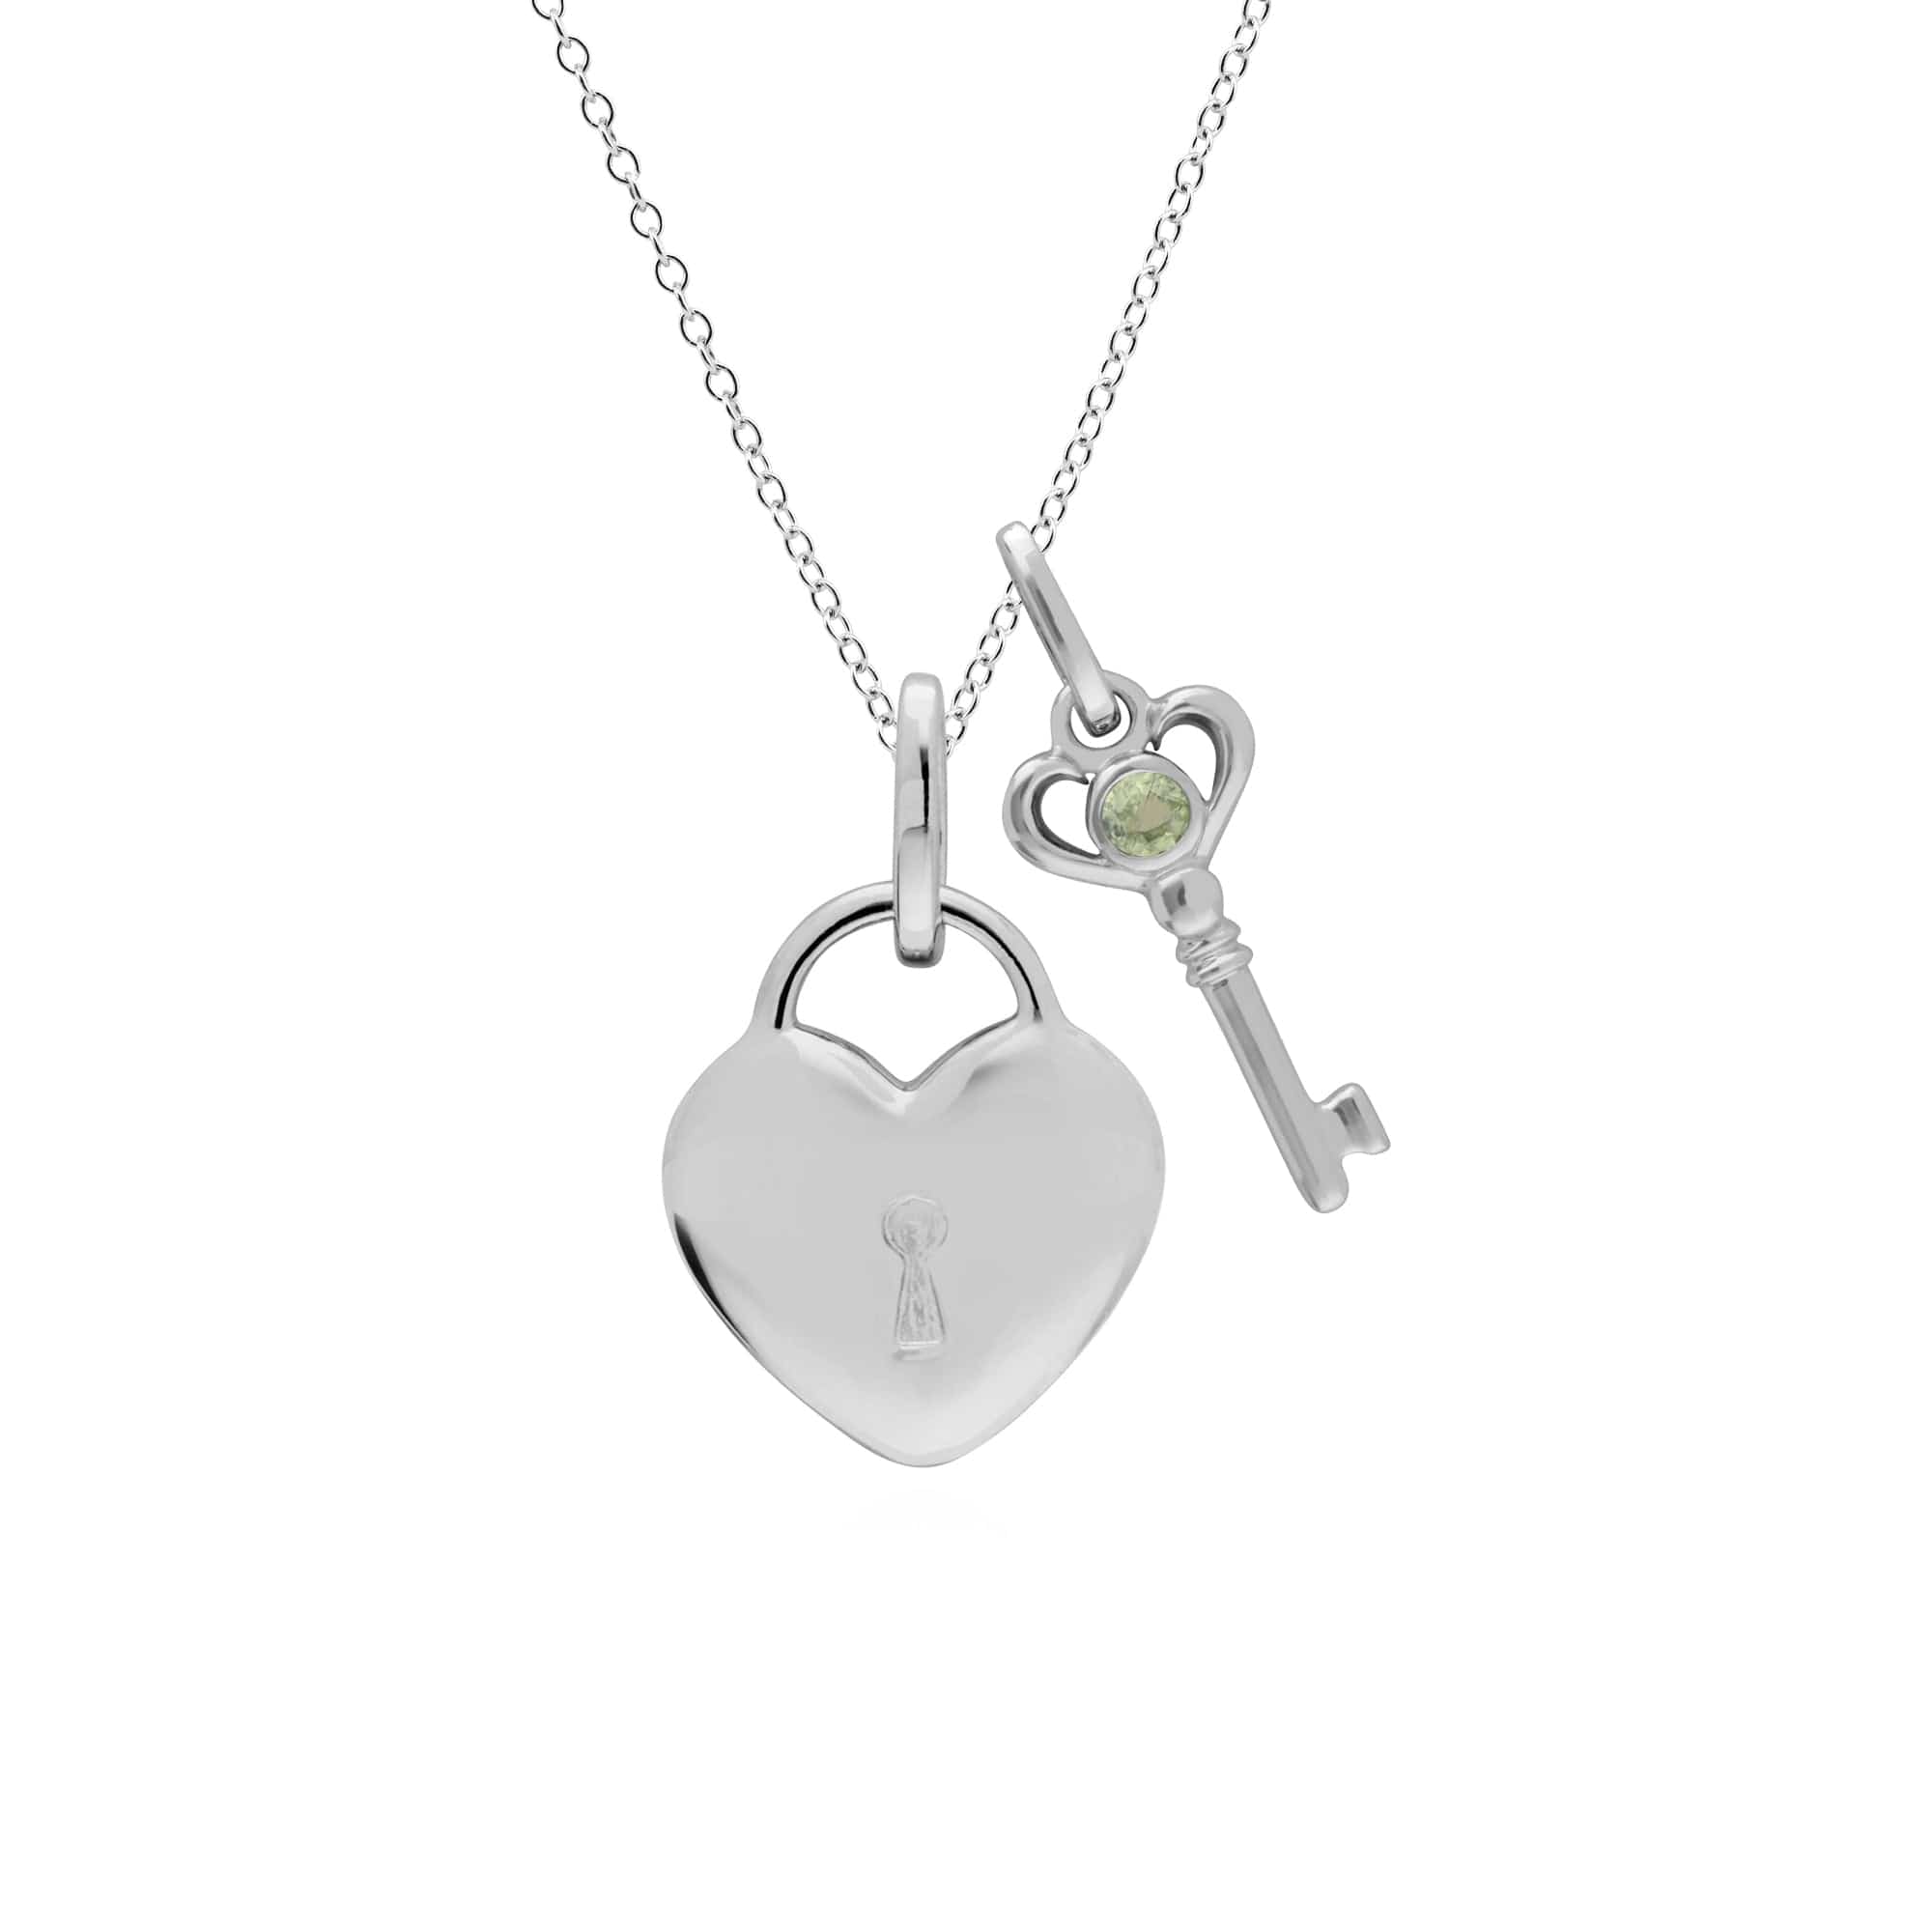 270P026407925-270P027001925 Classic Heart Lock Pendant & Peridot Key Charm in 925 Sterling Silver 1